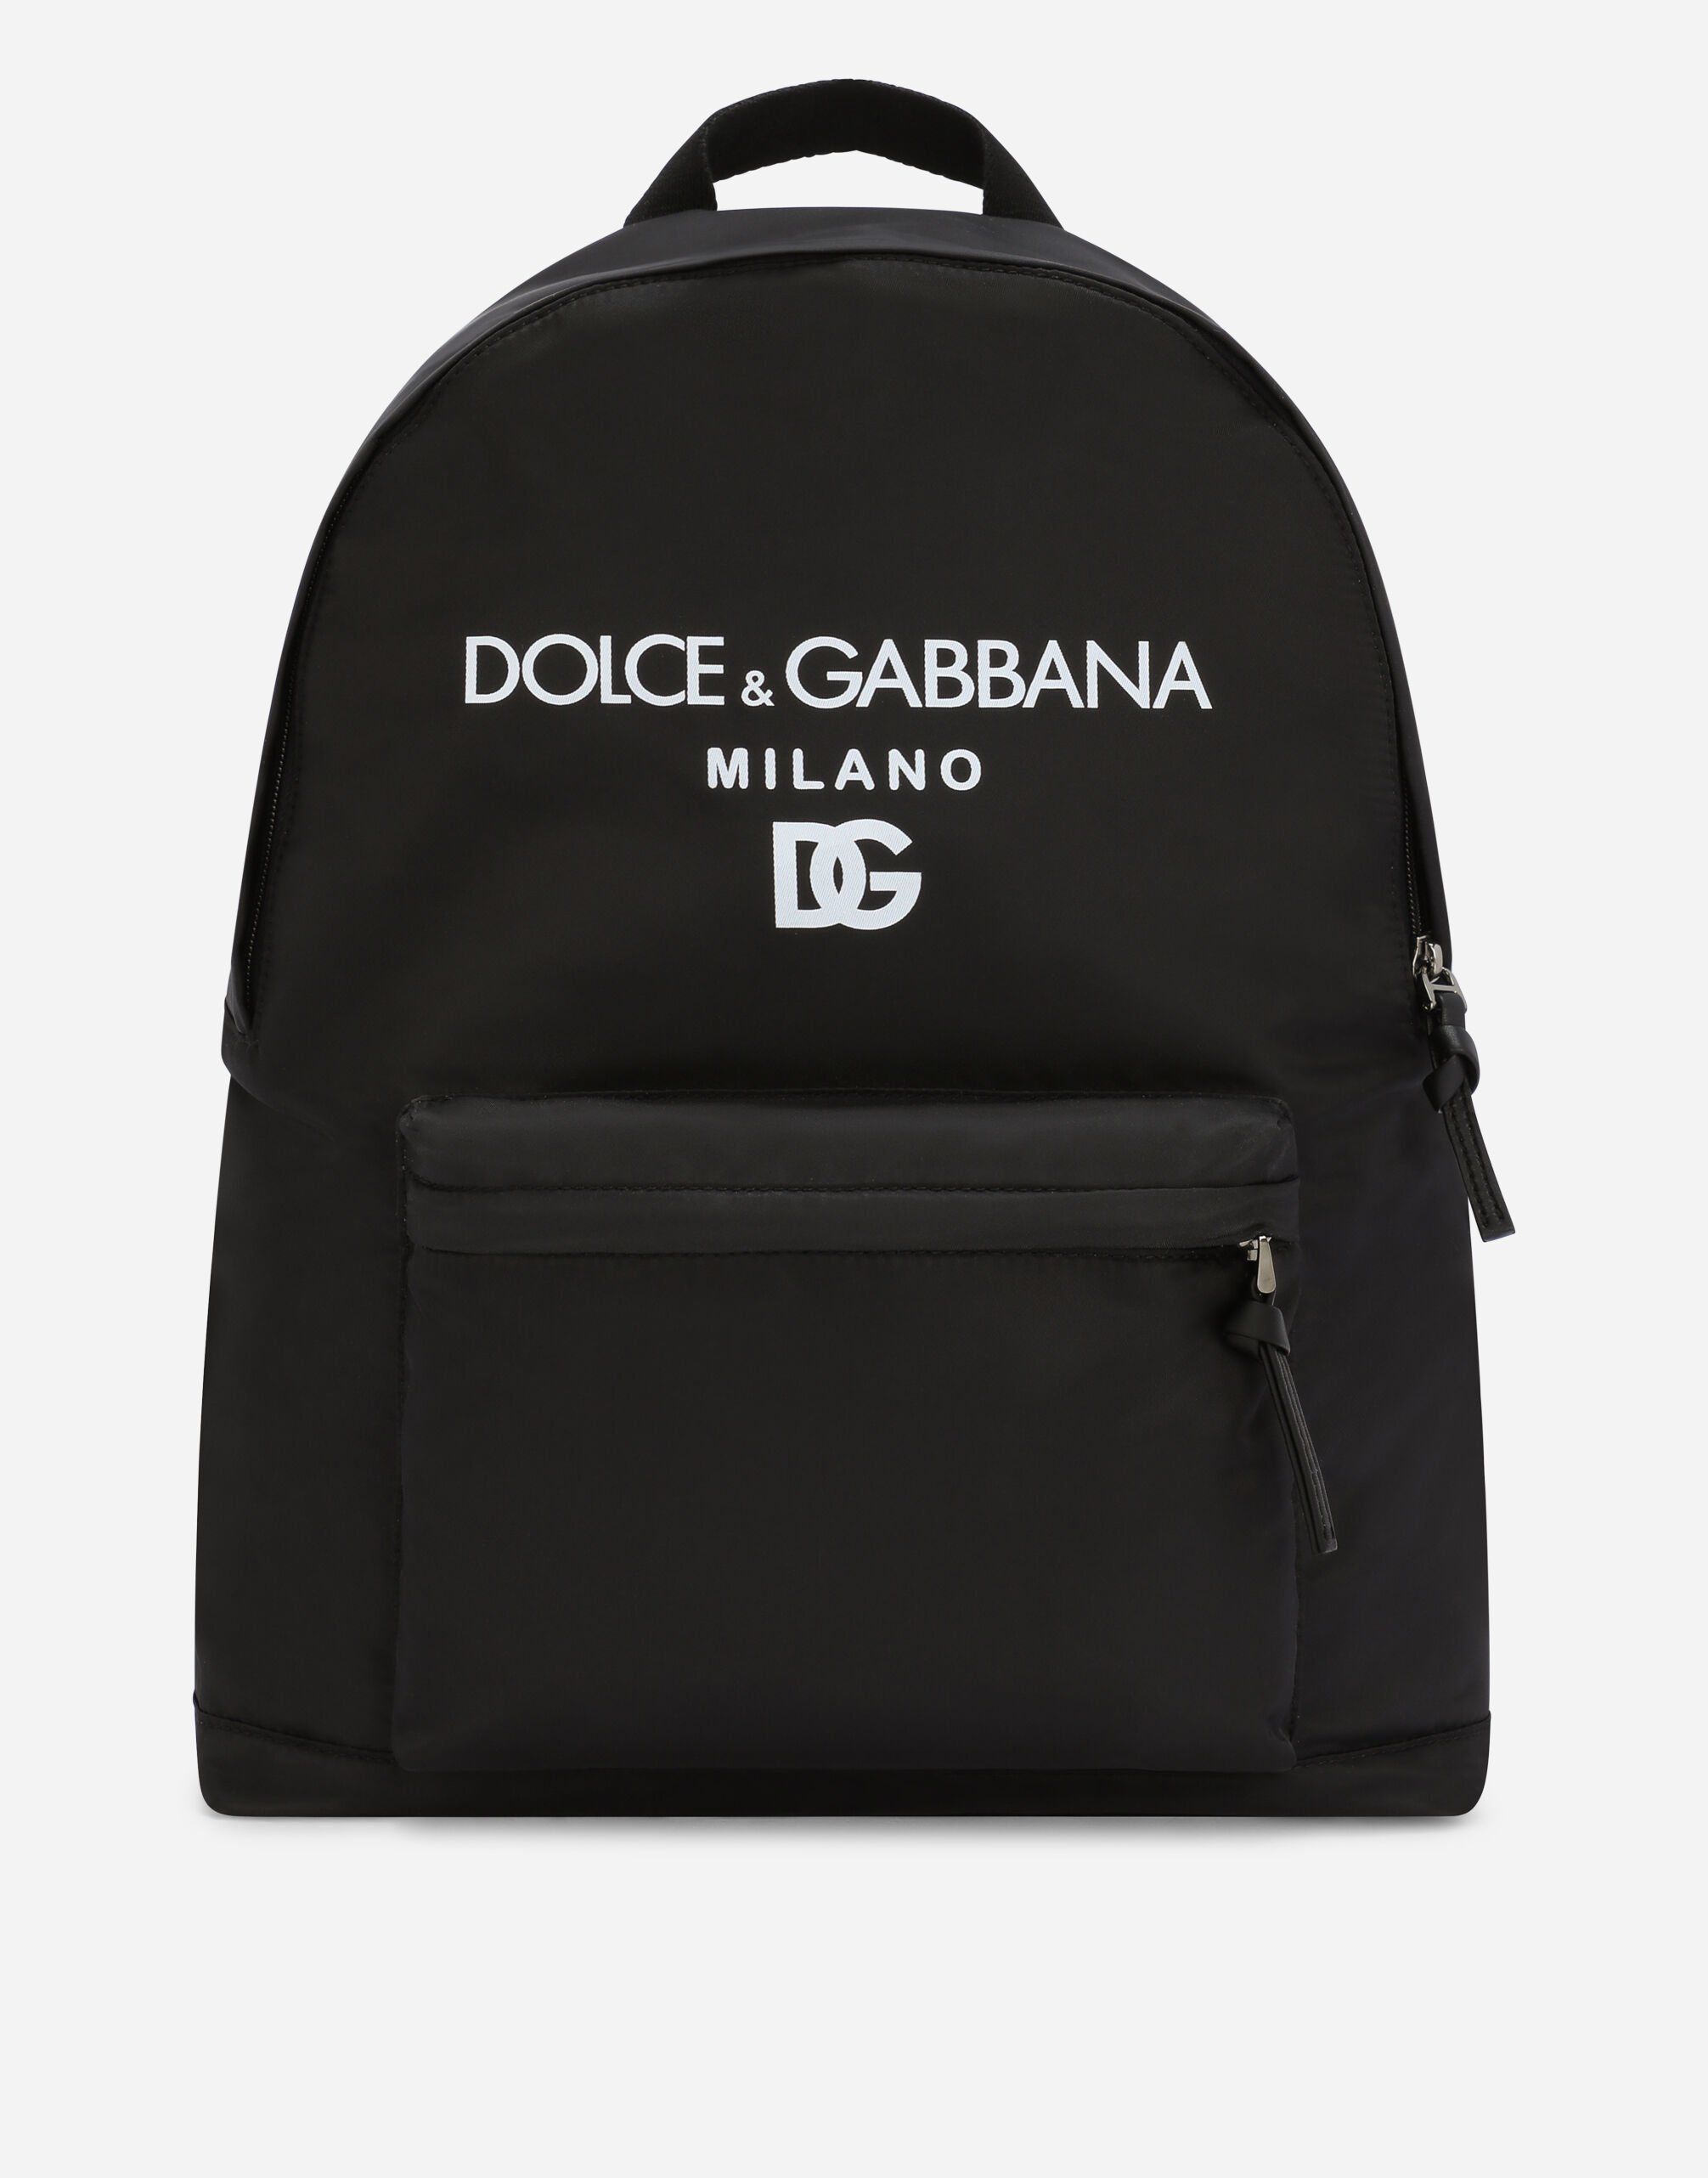 DolceGabbanaSpa حقيبة ظهر نايلون بطبعة DOLCE&GABBANA ميلانو متعدد الألوان L4JWFNHS7MN